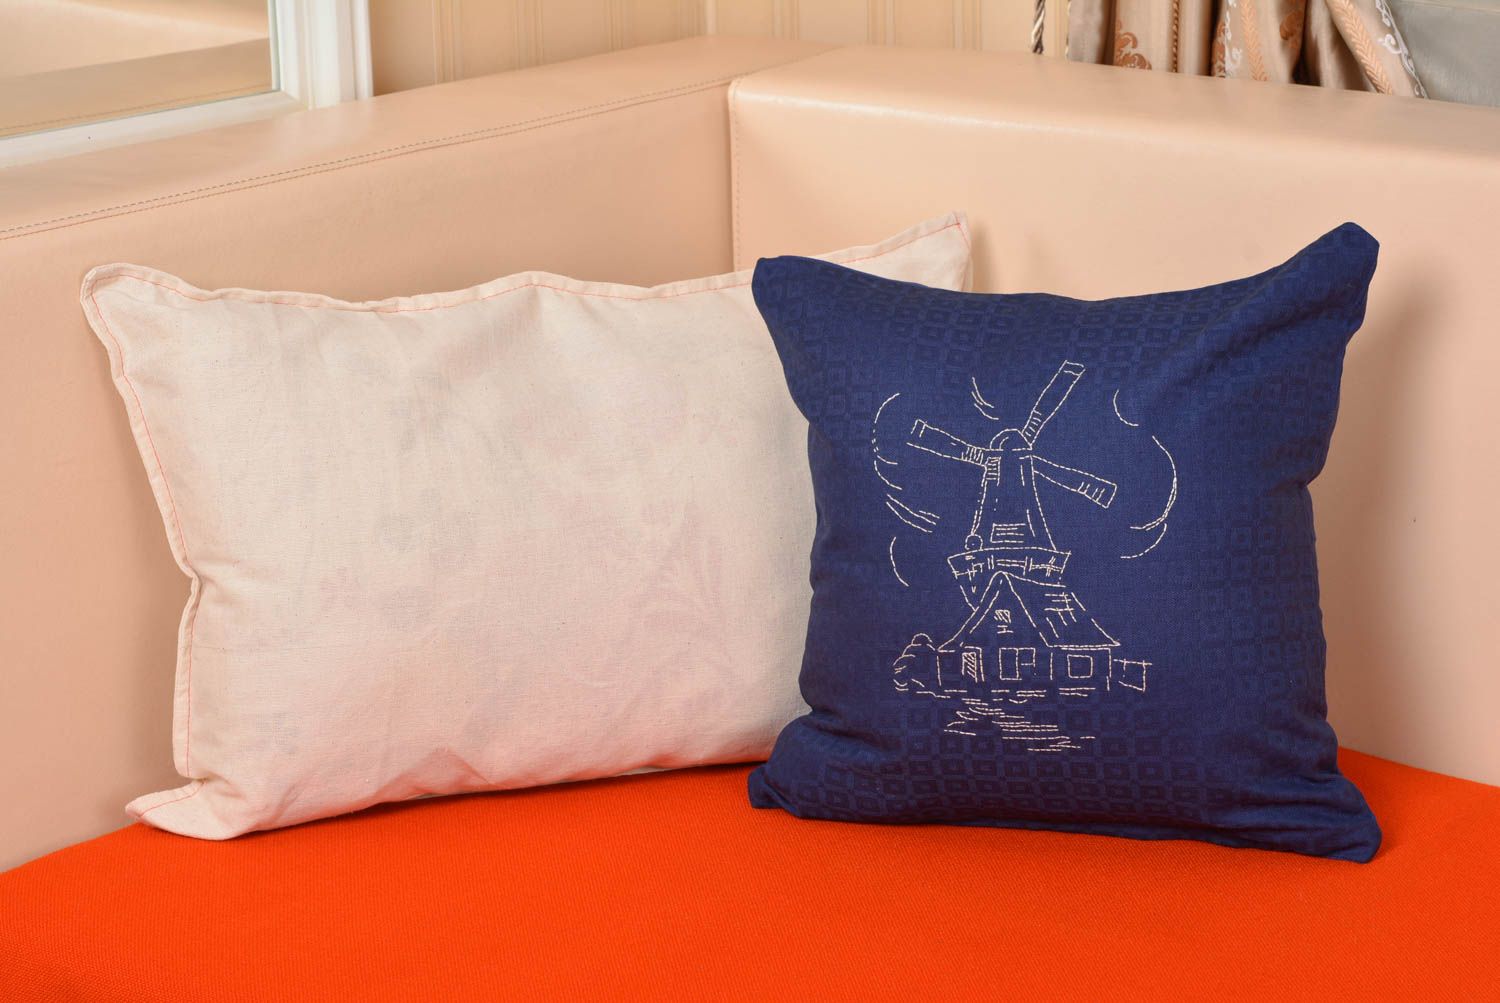 Handmade satin beautiful pillowcase with hand-embroidery home decor ideas photo 5